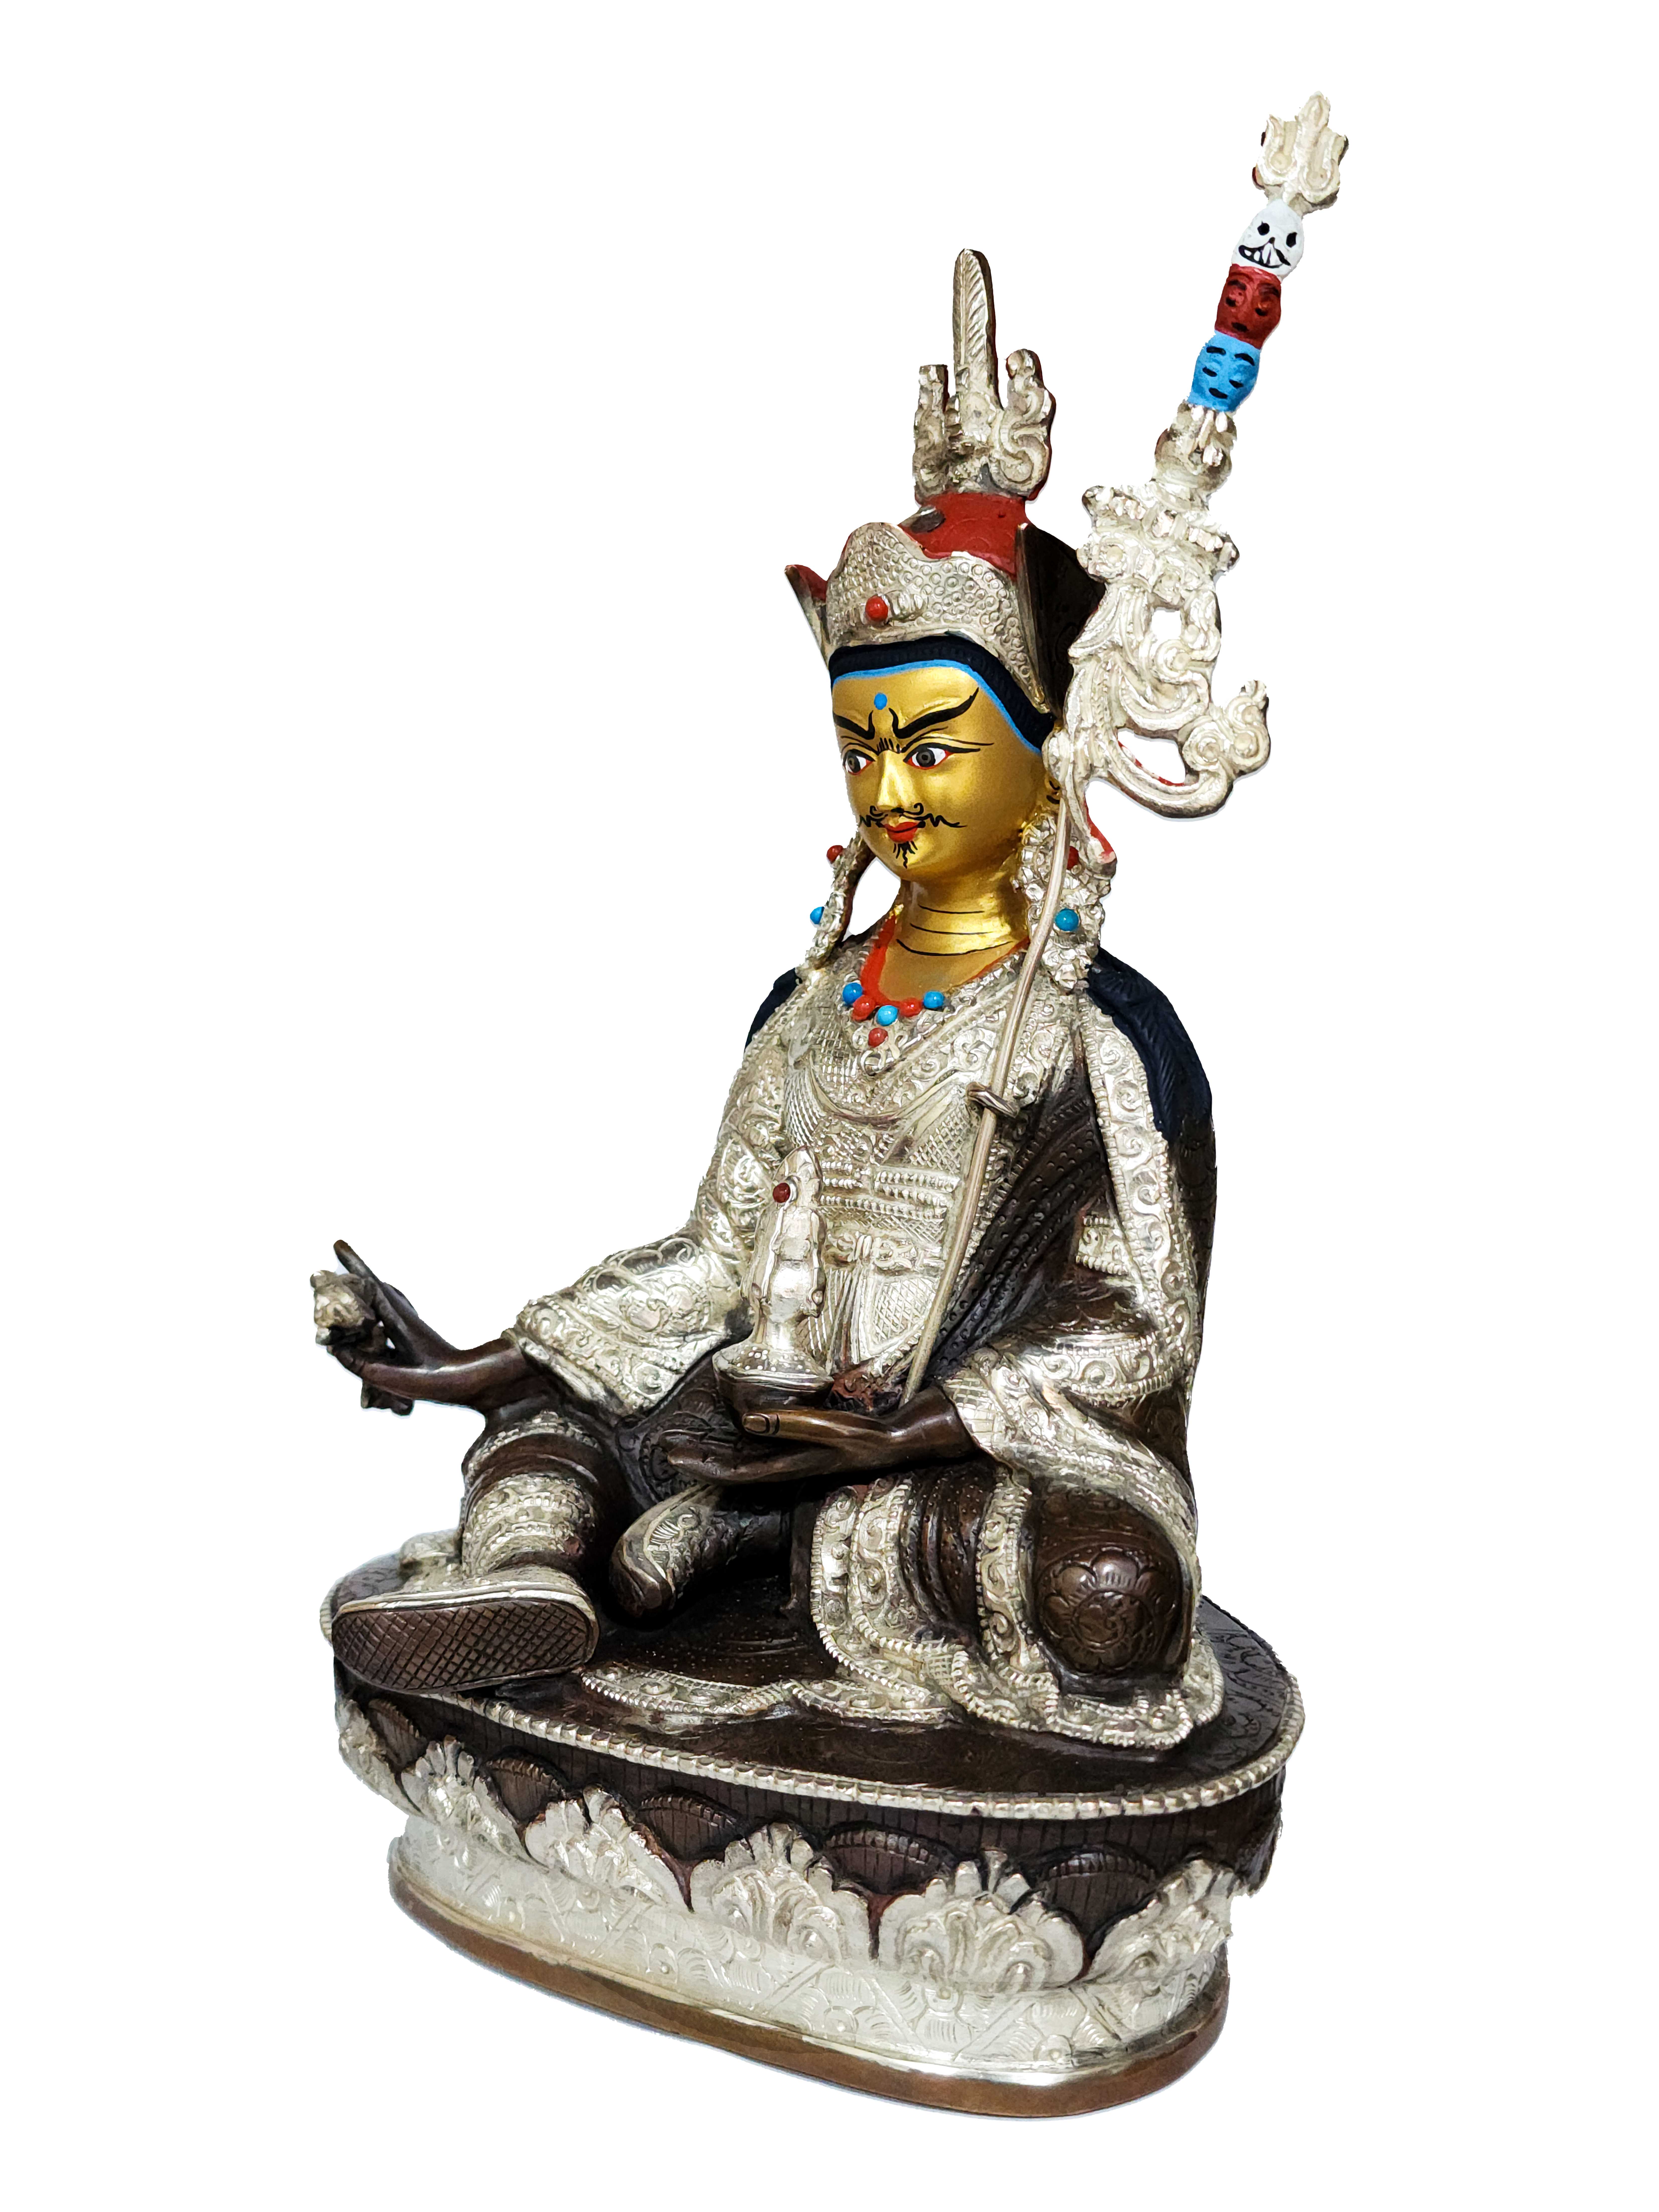 padmasambhava Buddhist Handmade Statue, silver And Chocolate Oxidized, Wtih face Painted